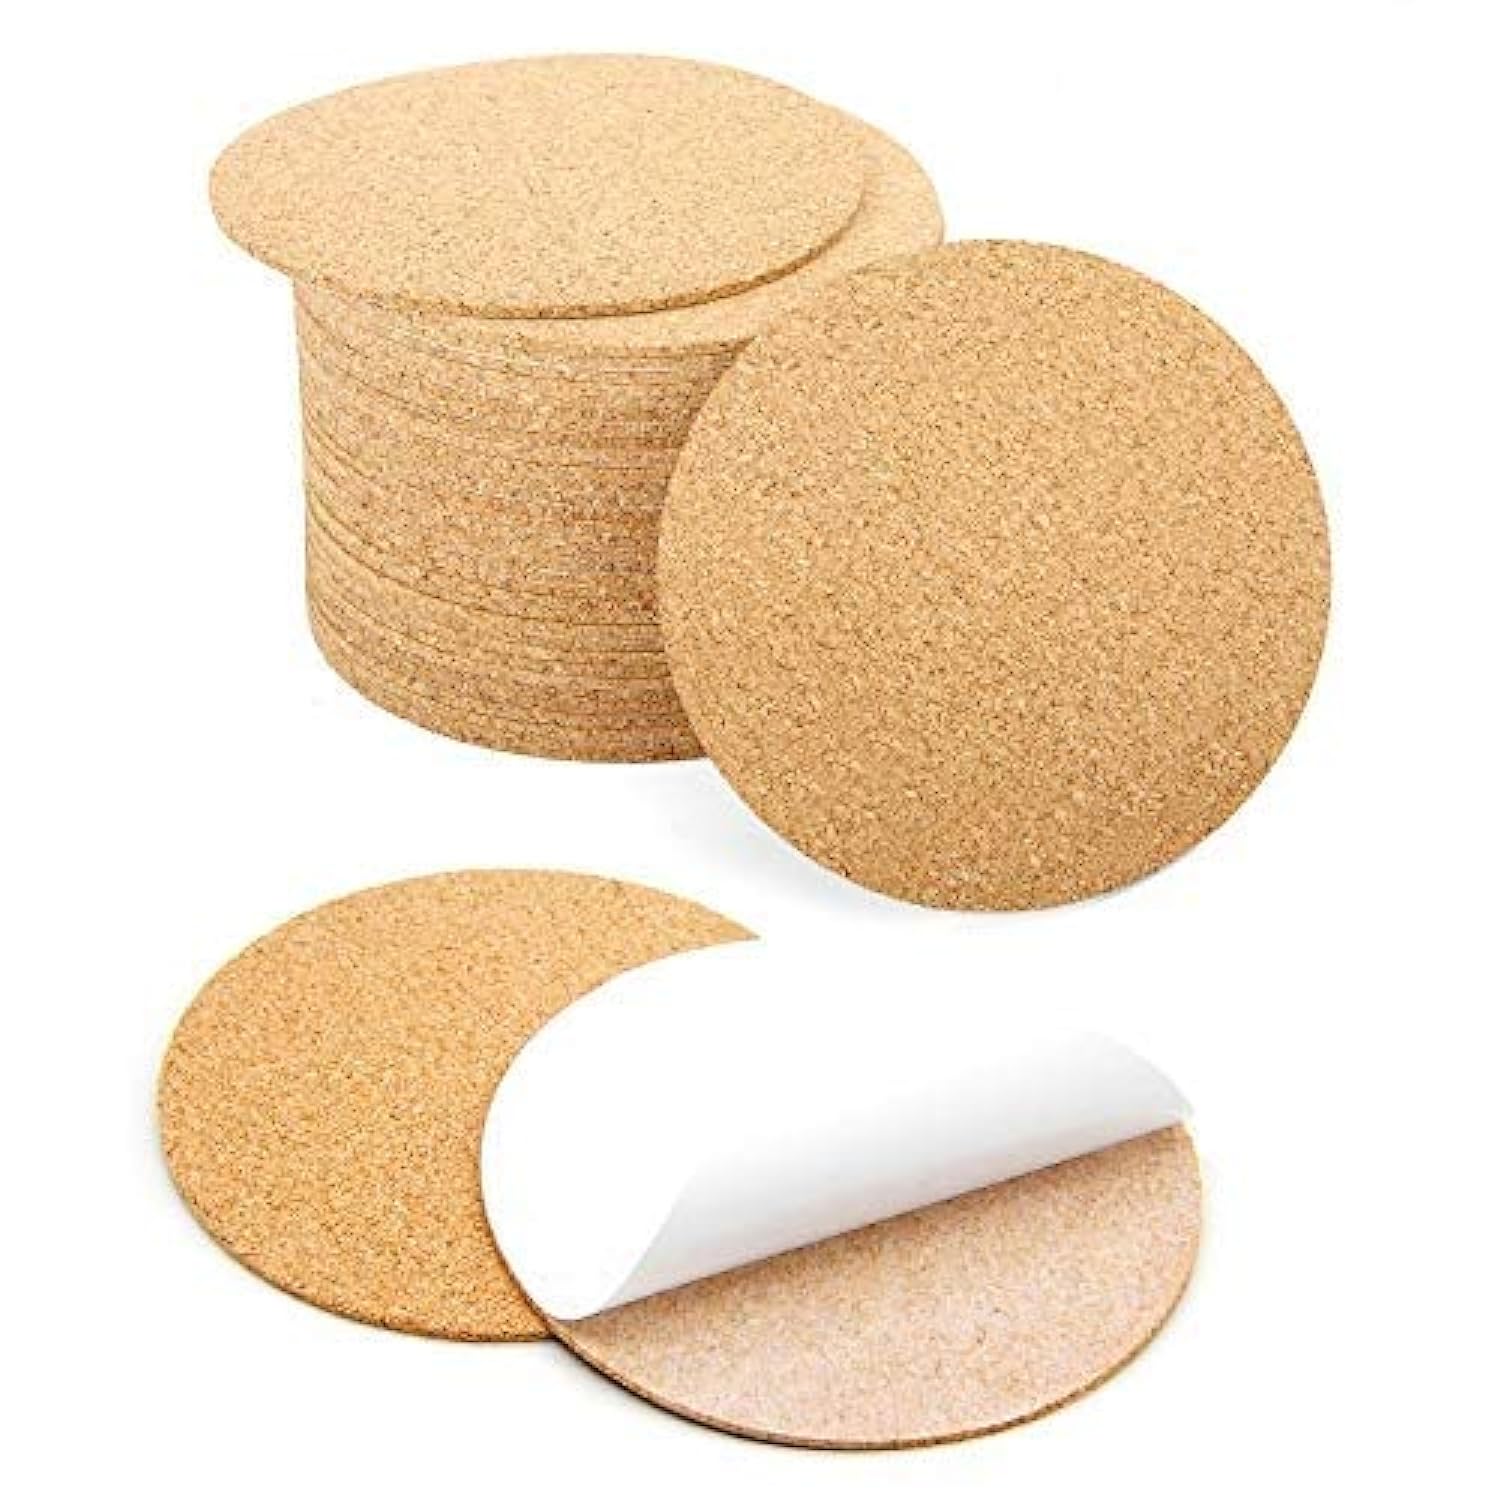 Great Choice Products 36 Pcs Self-Adhesive Cork Round For Diy Coasters, 4"X 4" Cork Circle, Cork Tiles, Cork Mat, Cork Sheets With Strong Adhesi…